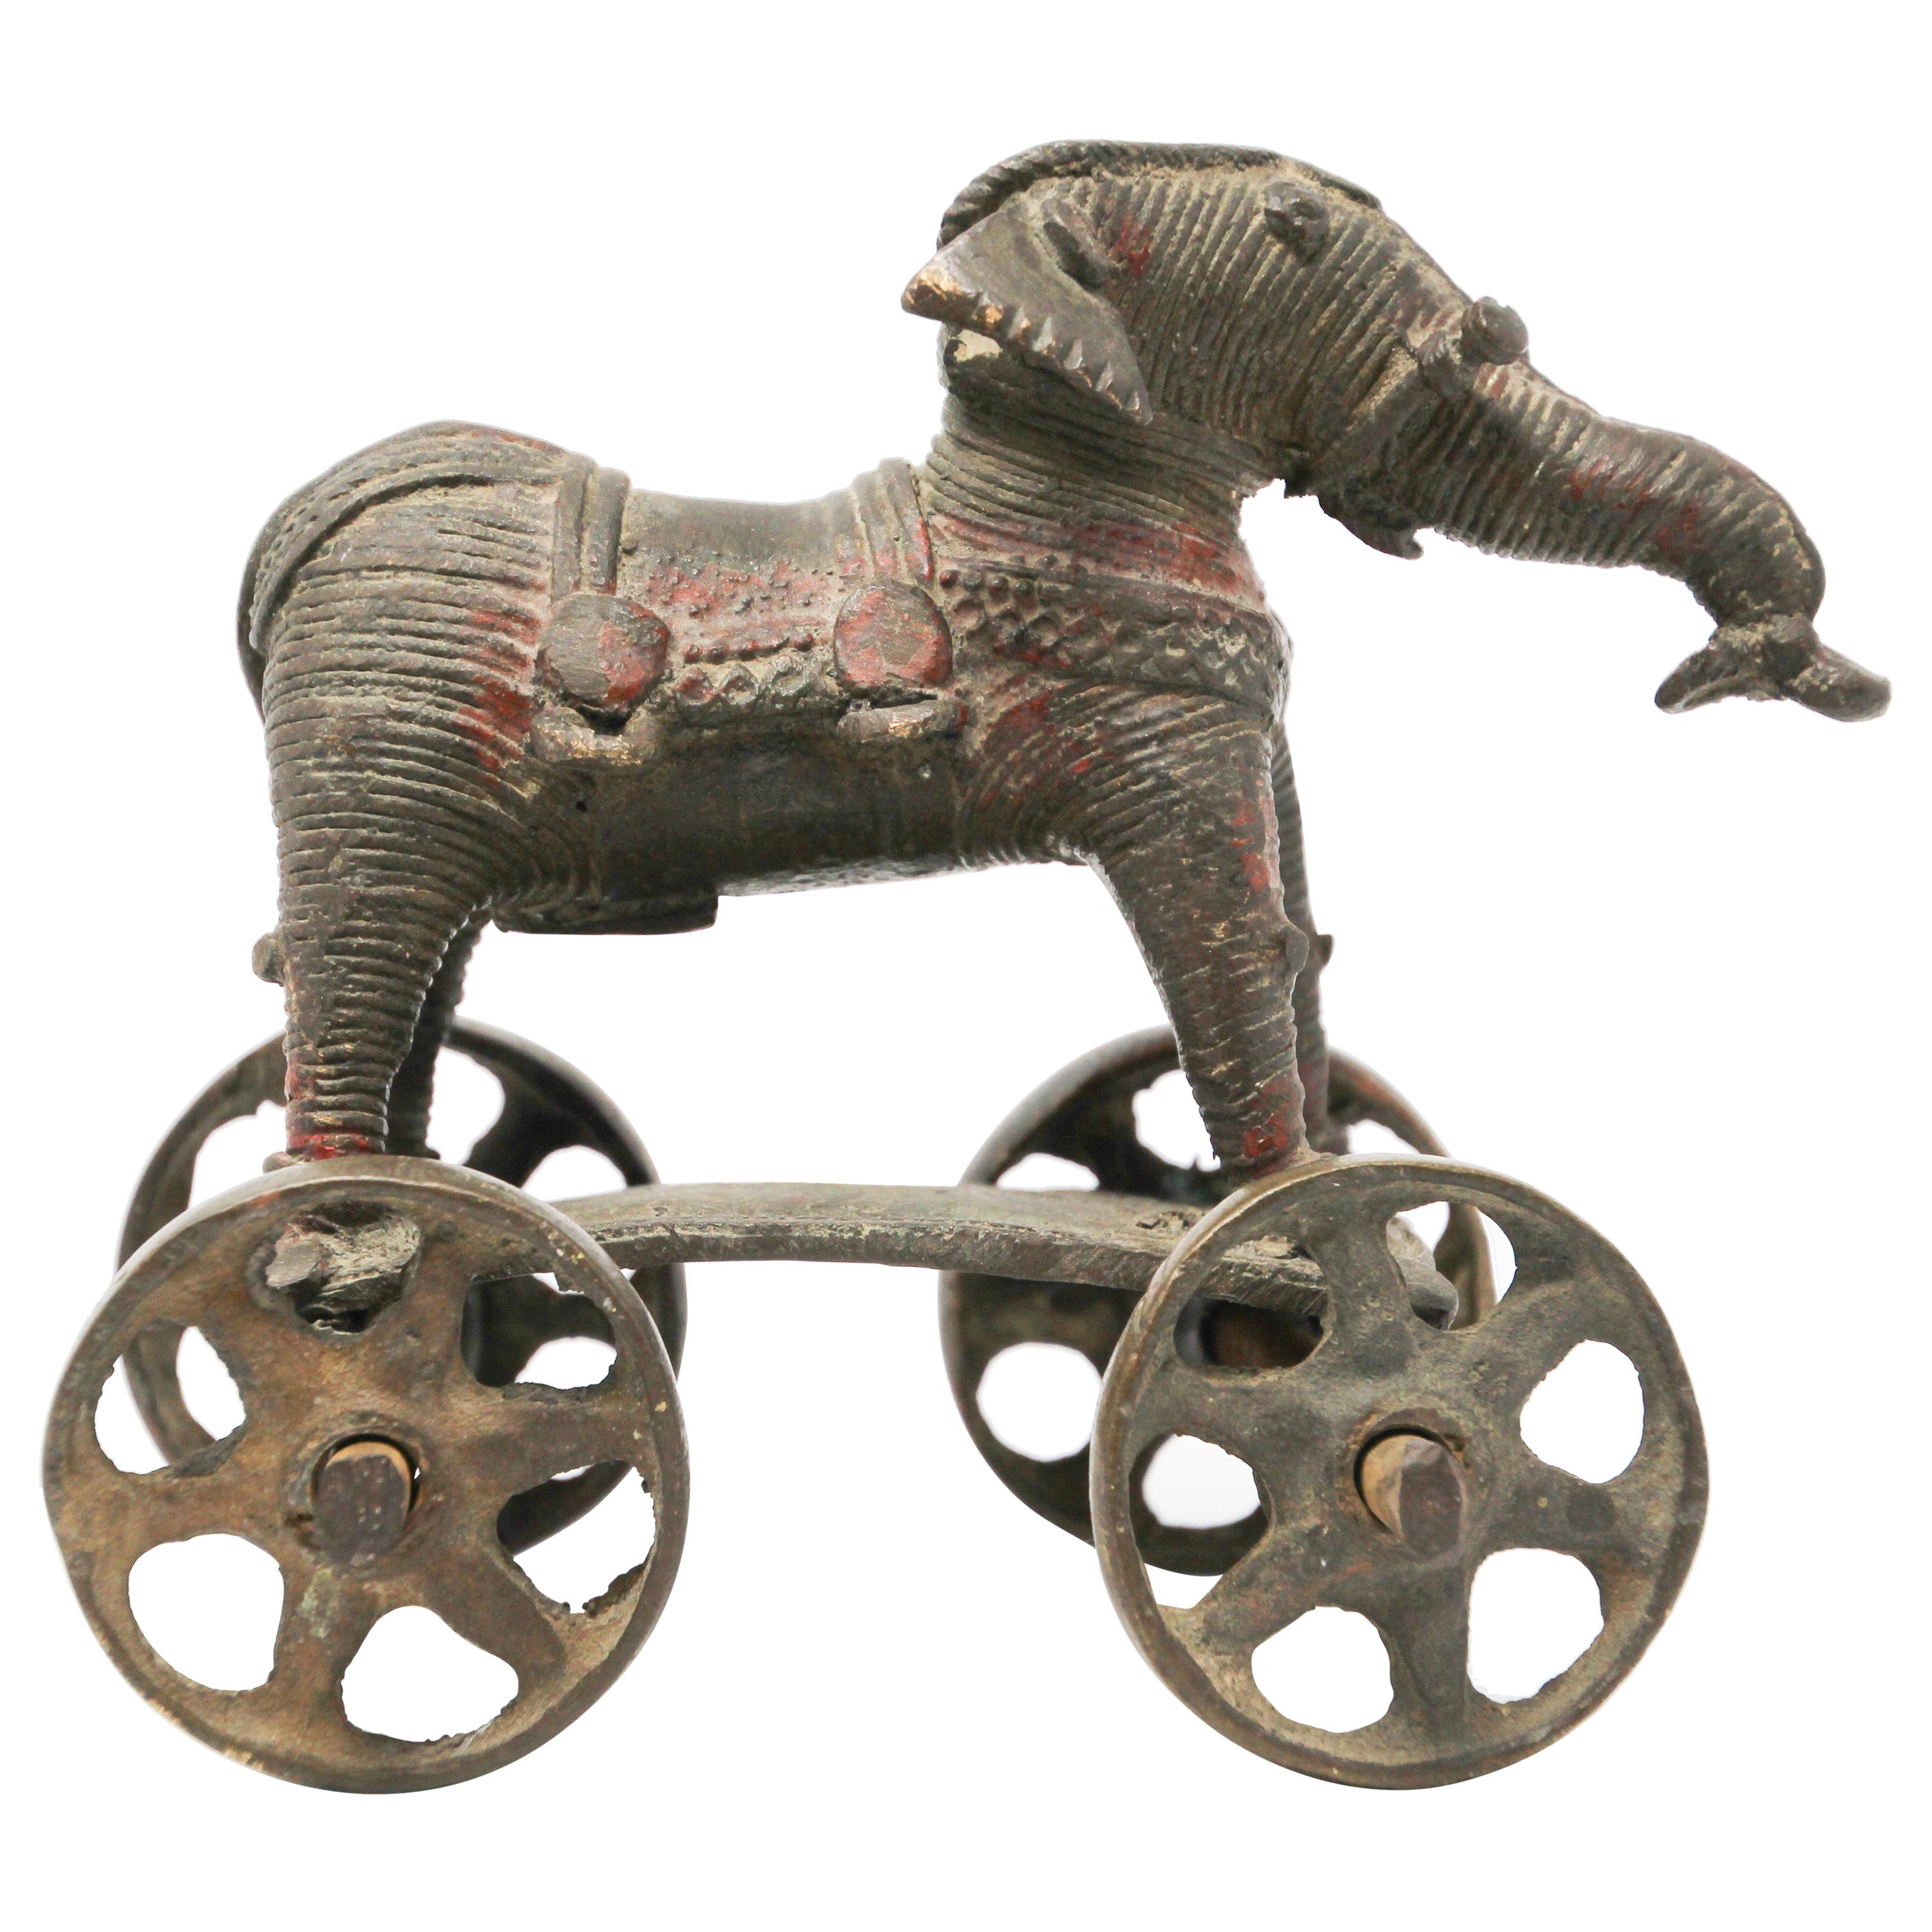 Antique Elephant Toy Cast Bronze on Wheels, India